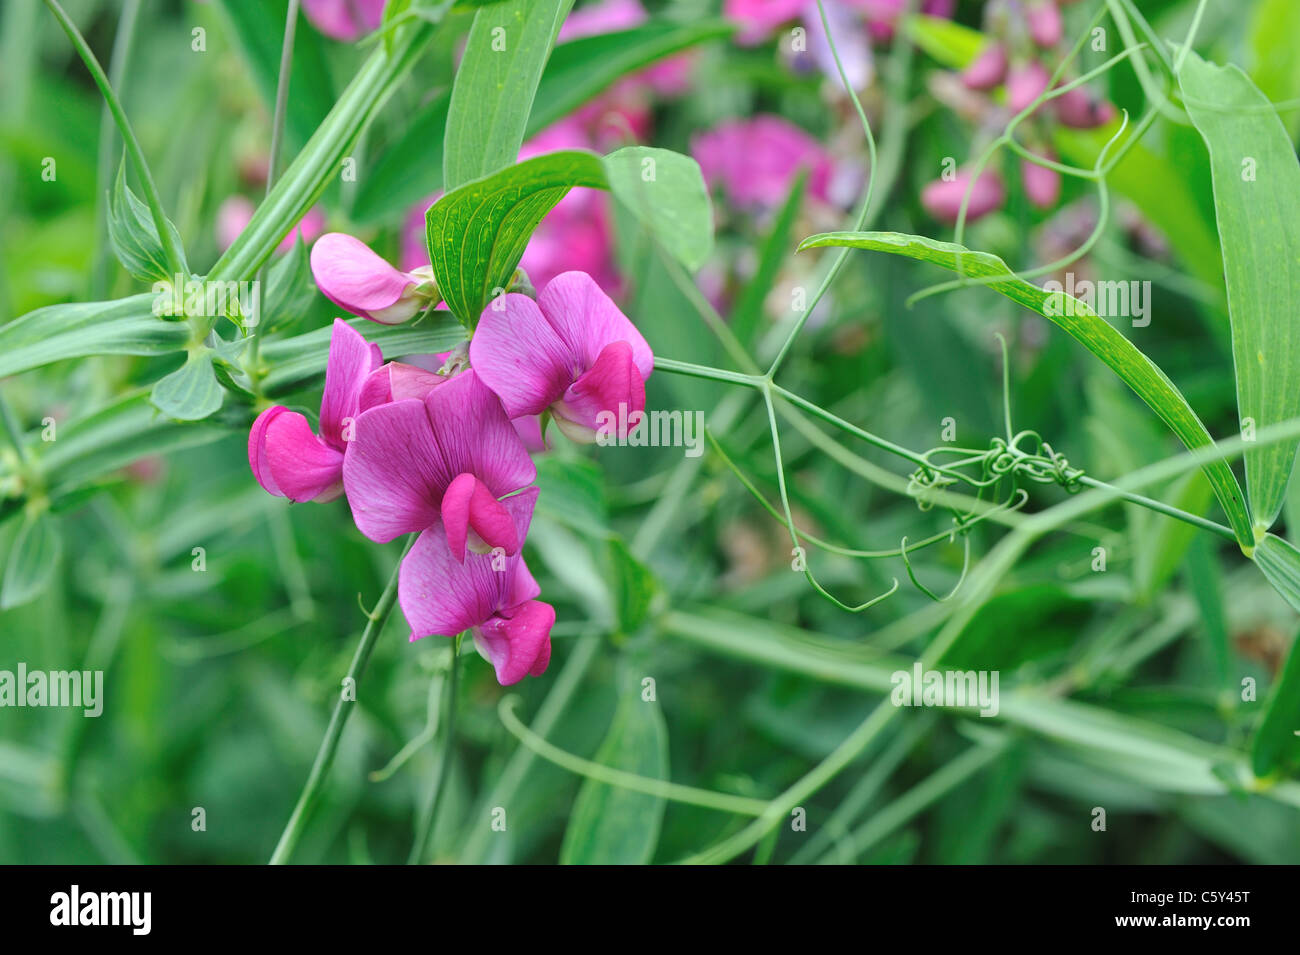 Perennial peavine - Perennial sweet pea - Everlasting pea (Lathyrus latifolius) blooming in summer Stock Photo